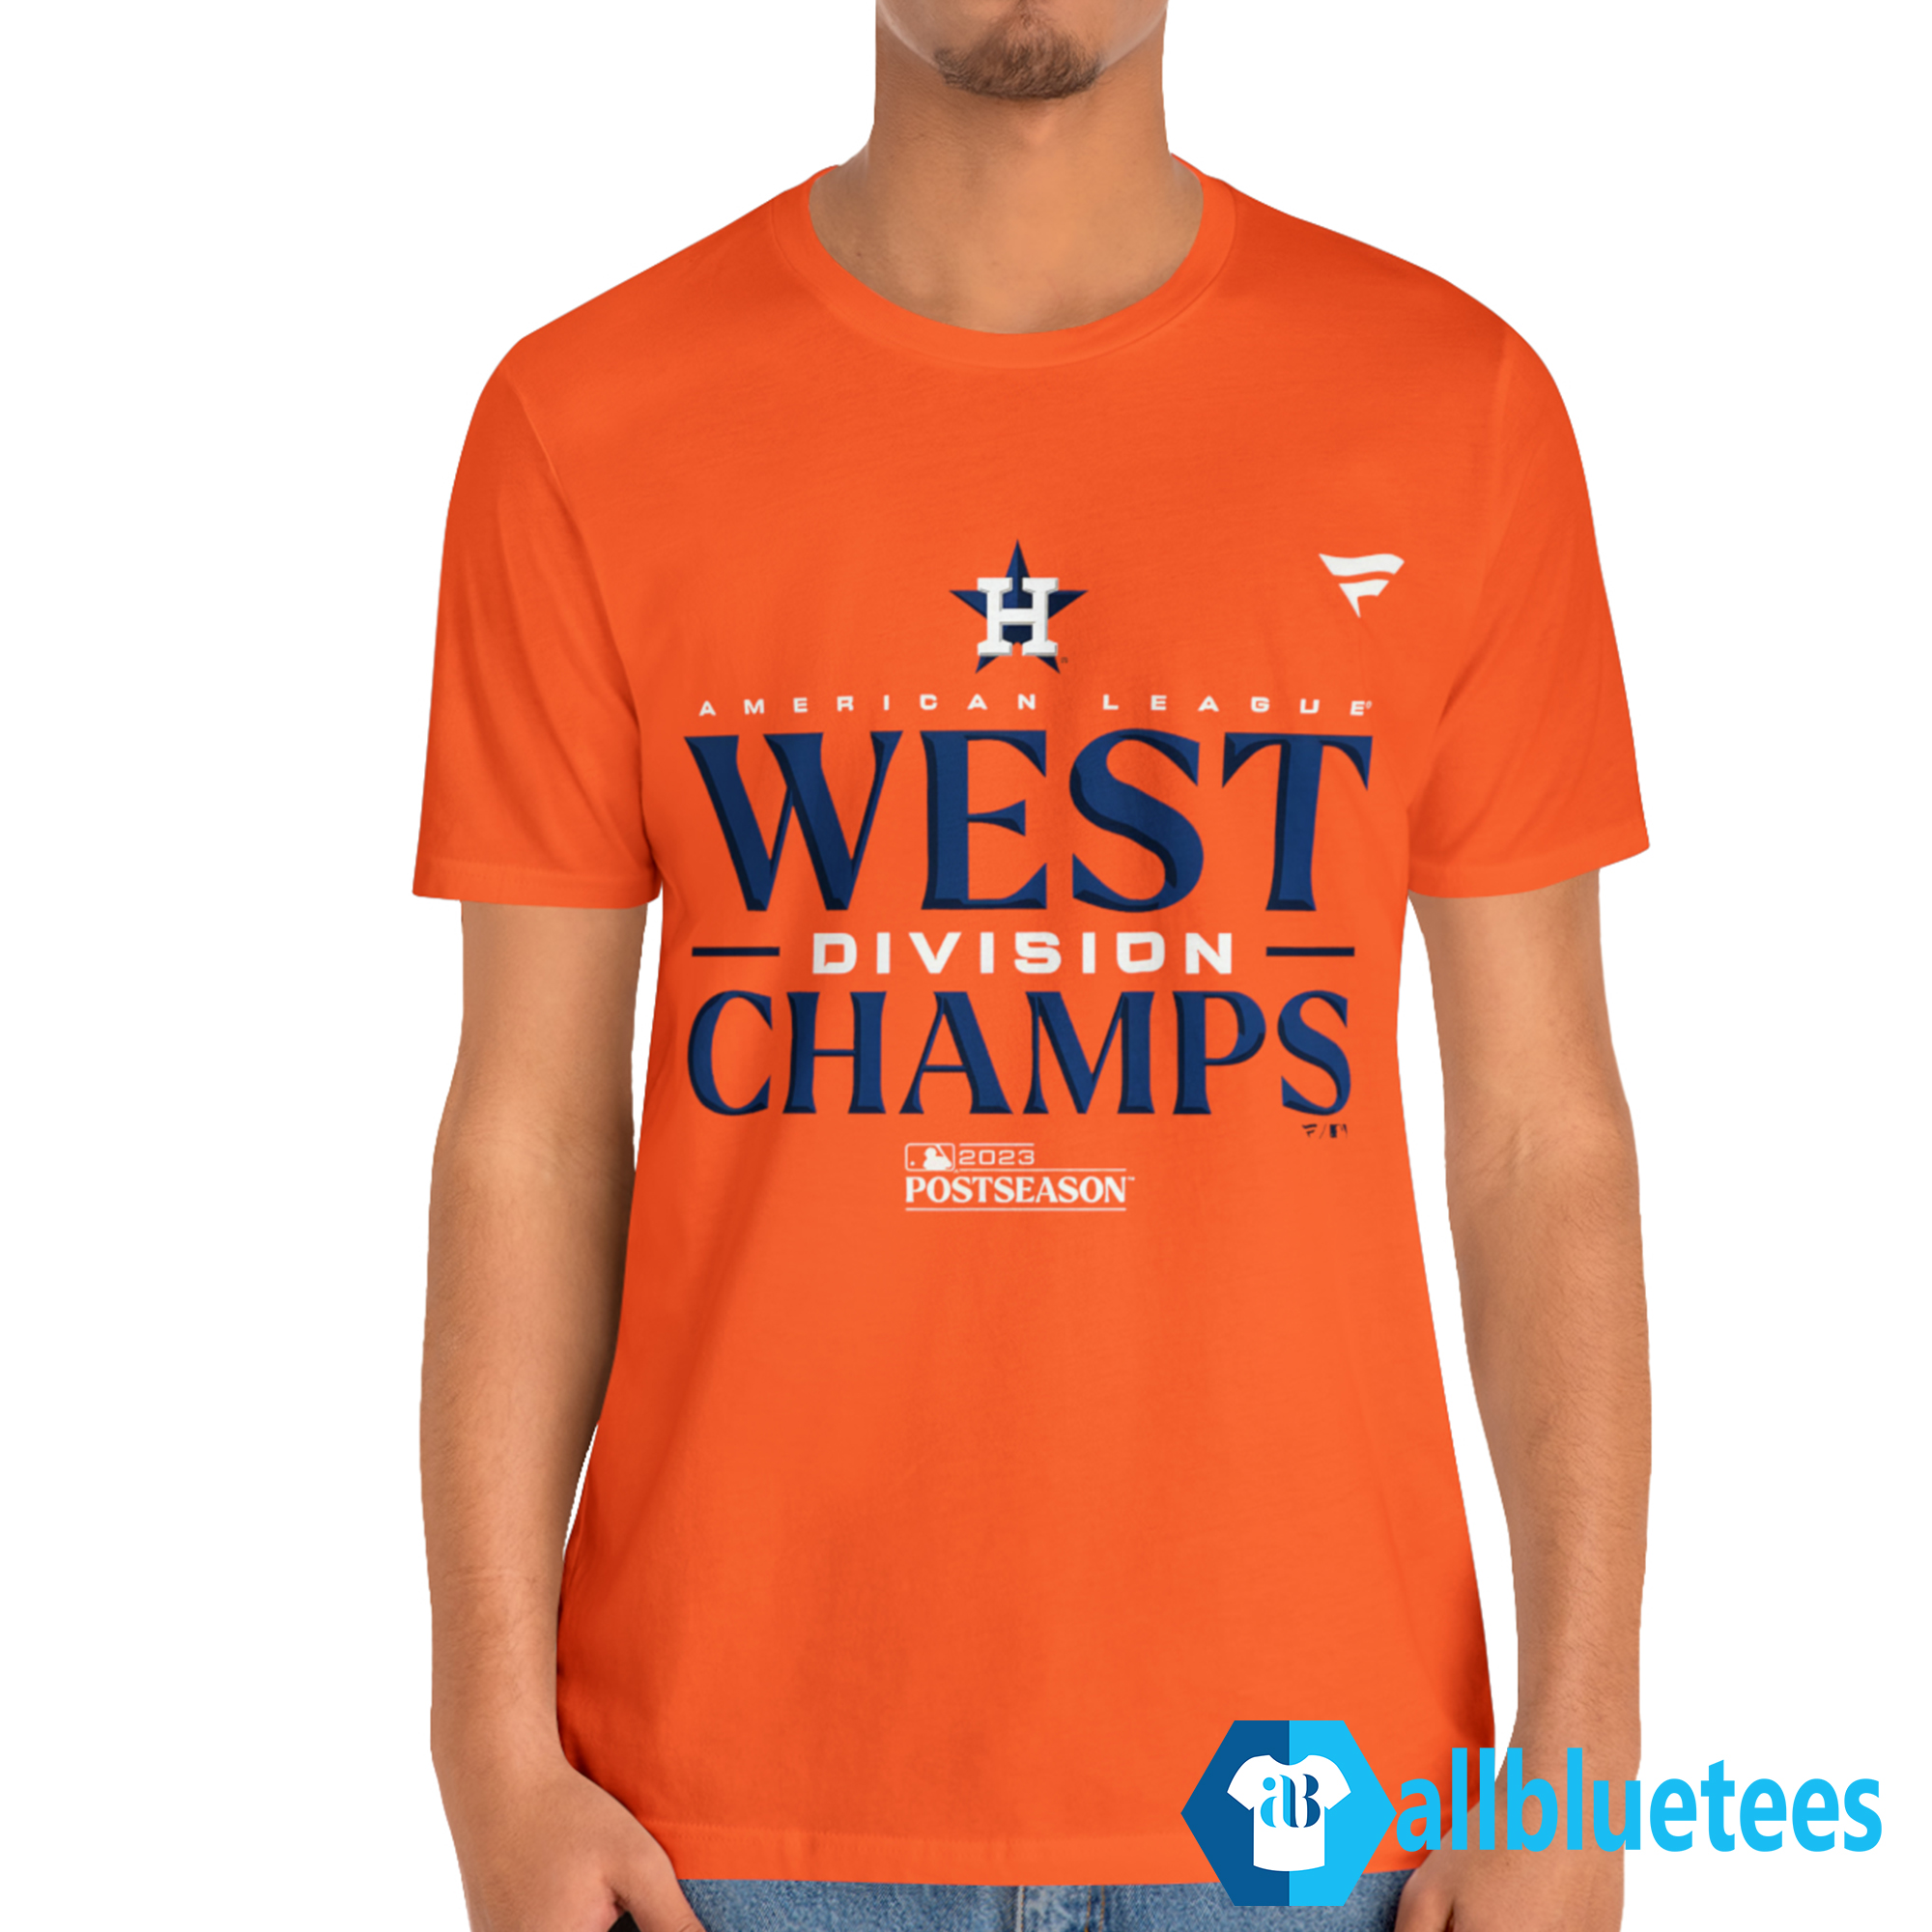 al west champions